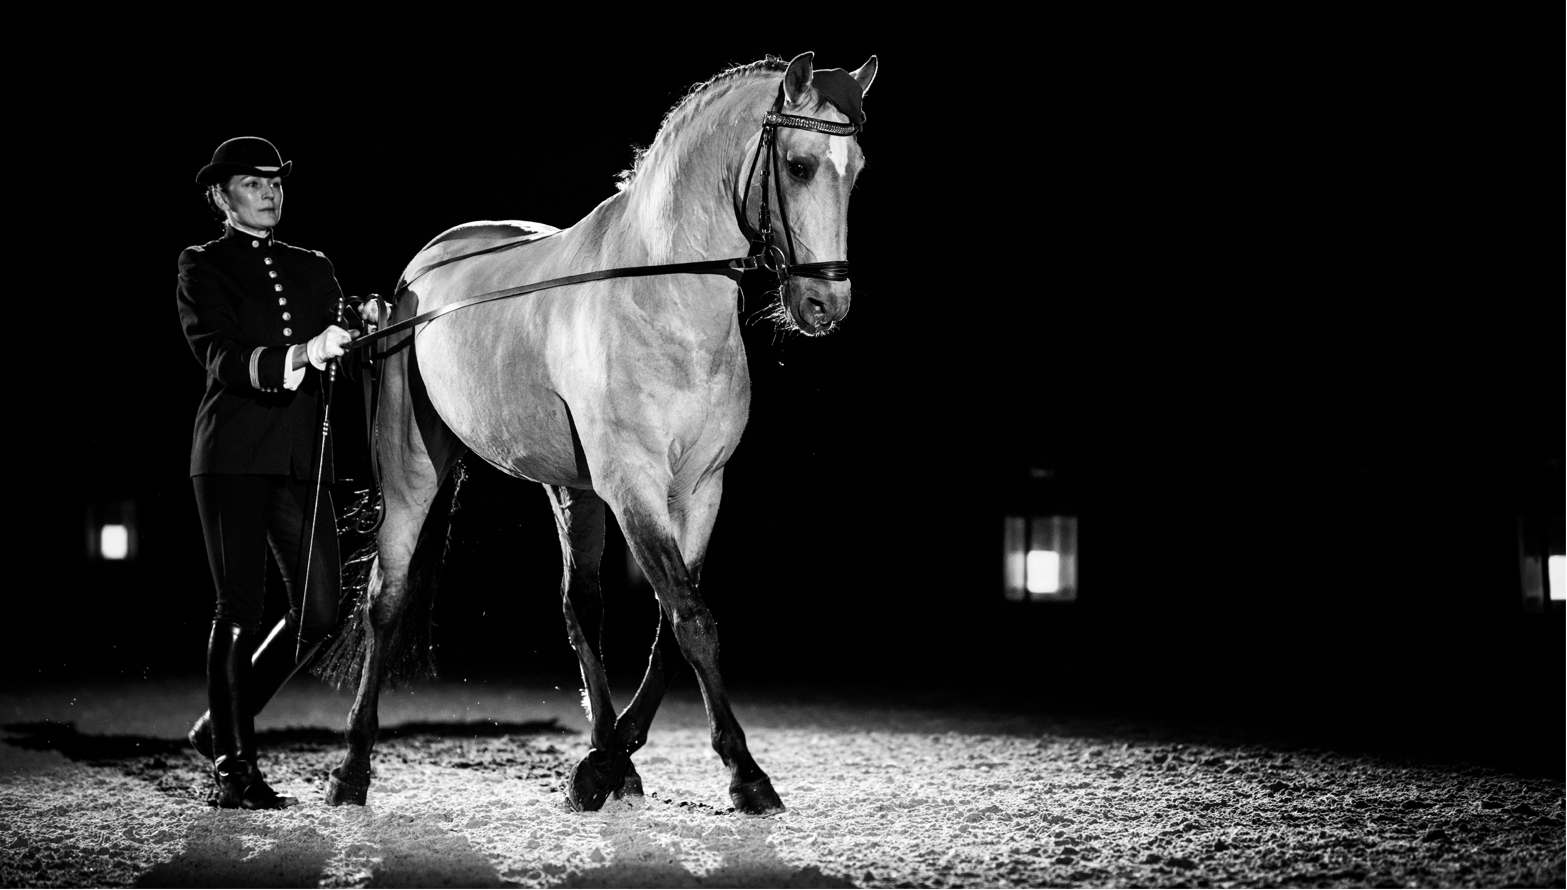 The Cadre Noir - Royal Horse